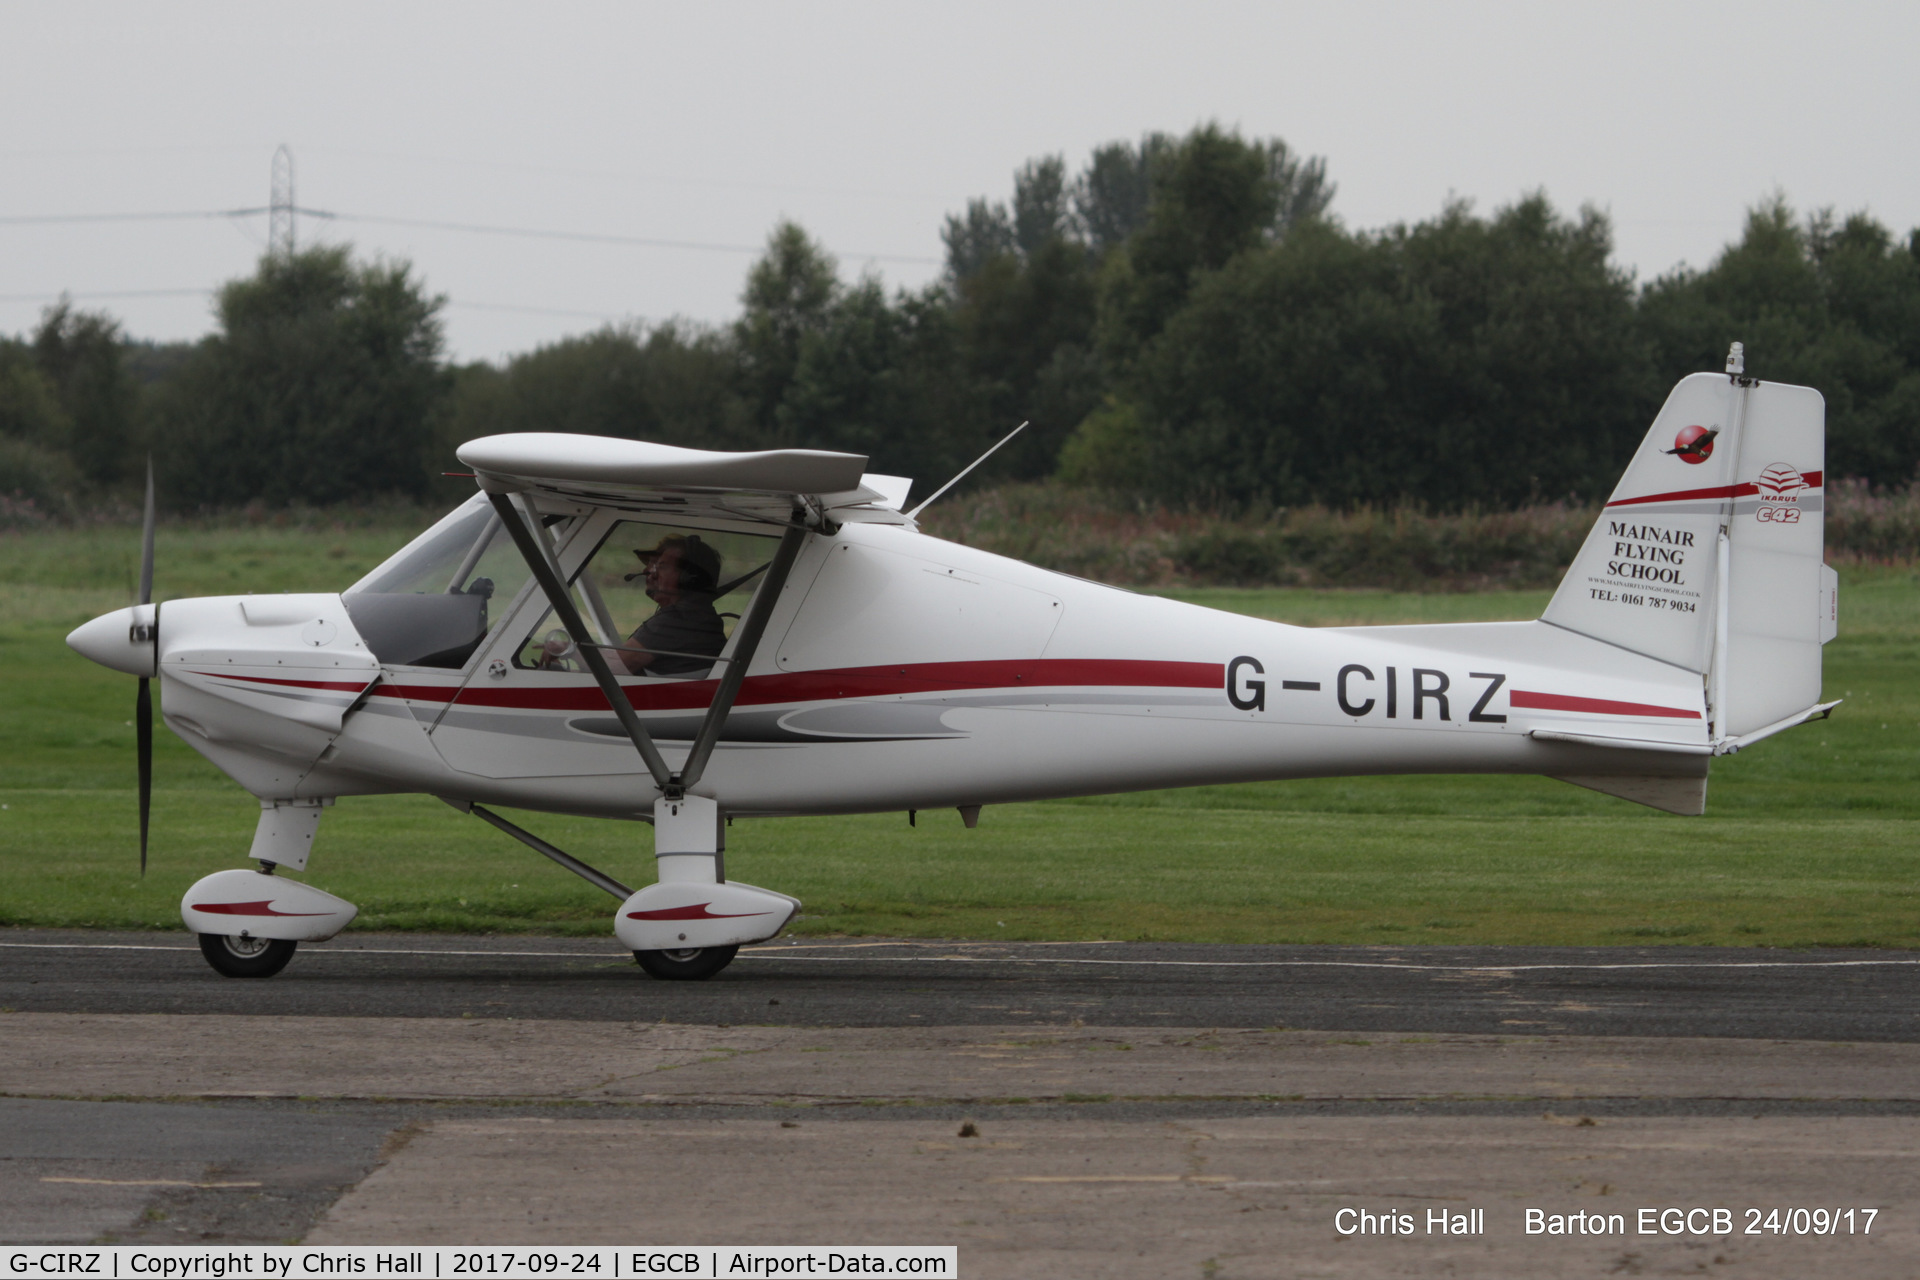 G-CIRZ, 2015 Comco Ikarus C42 FB80 C/N 1506-7403, at Barton